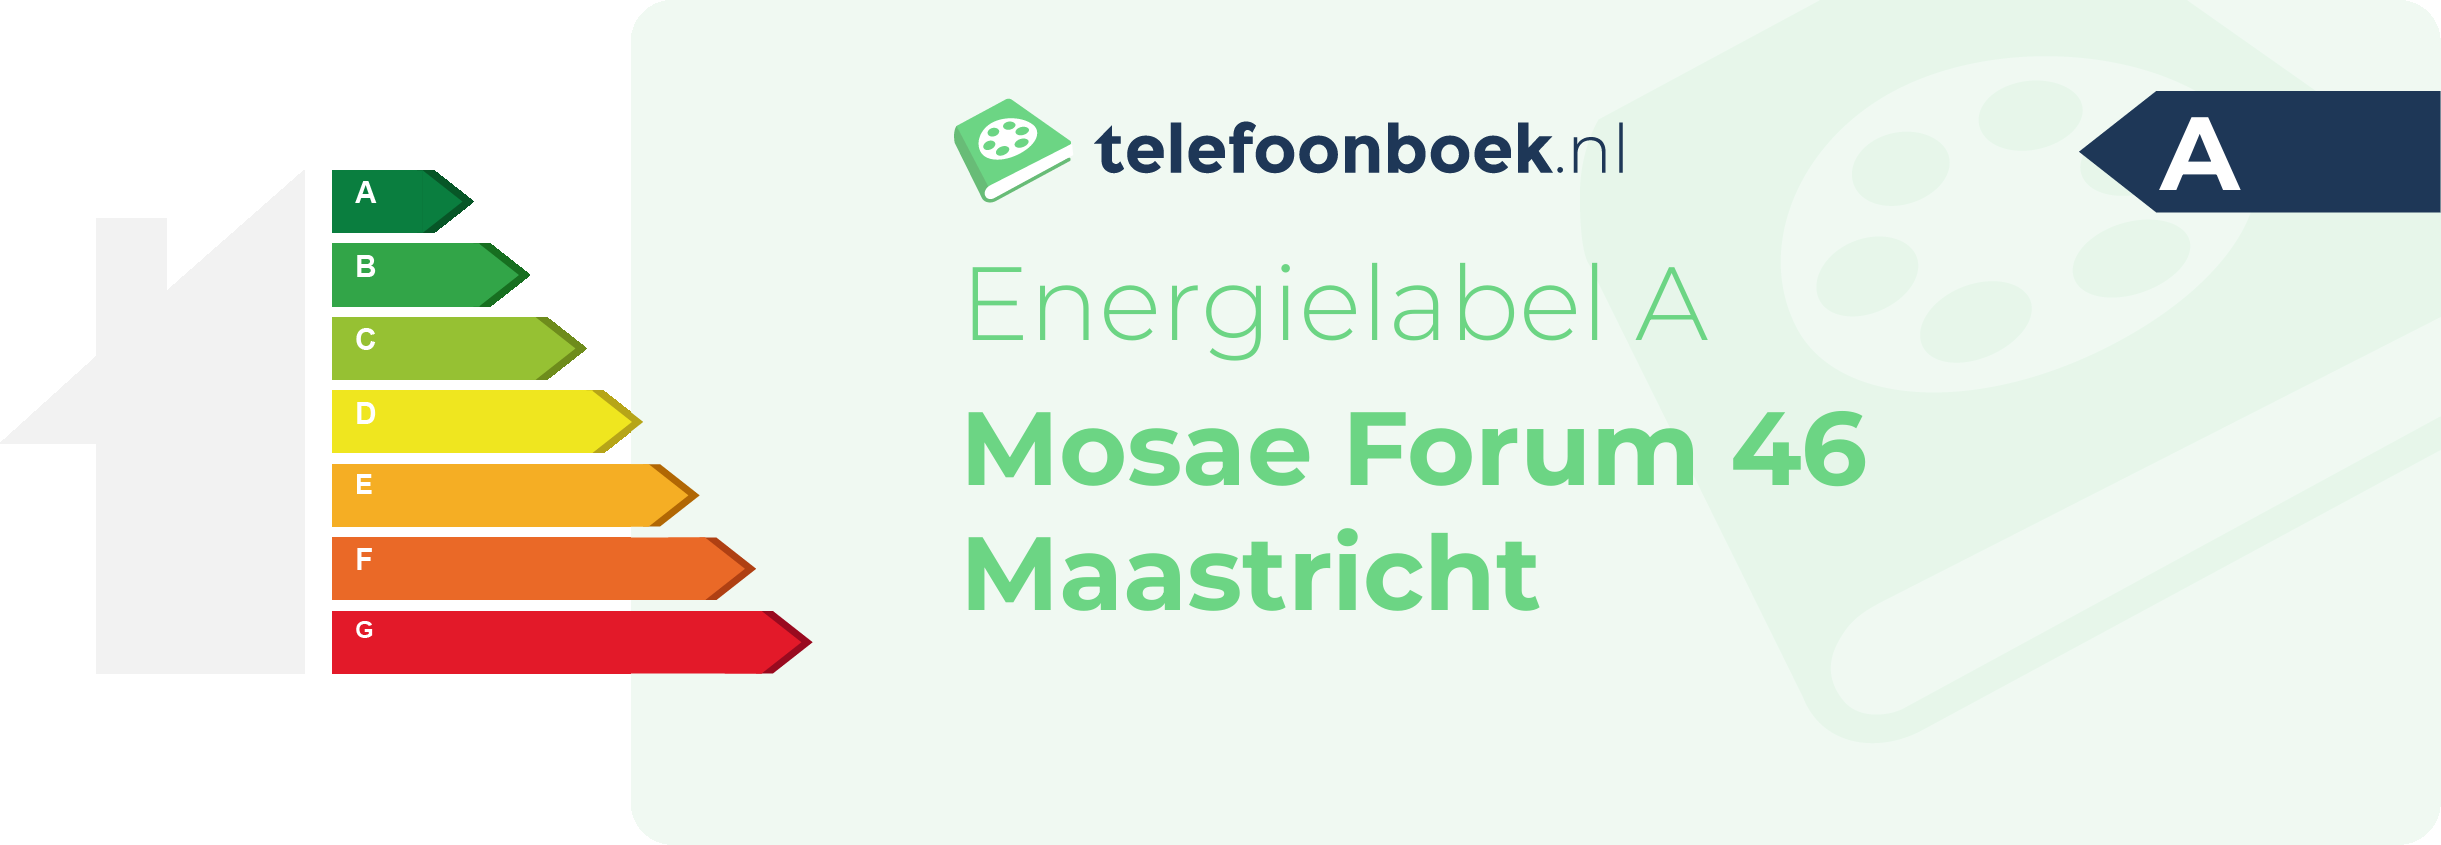 Energielabel Mosae Forum 46 Maastricht